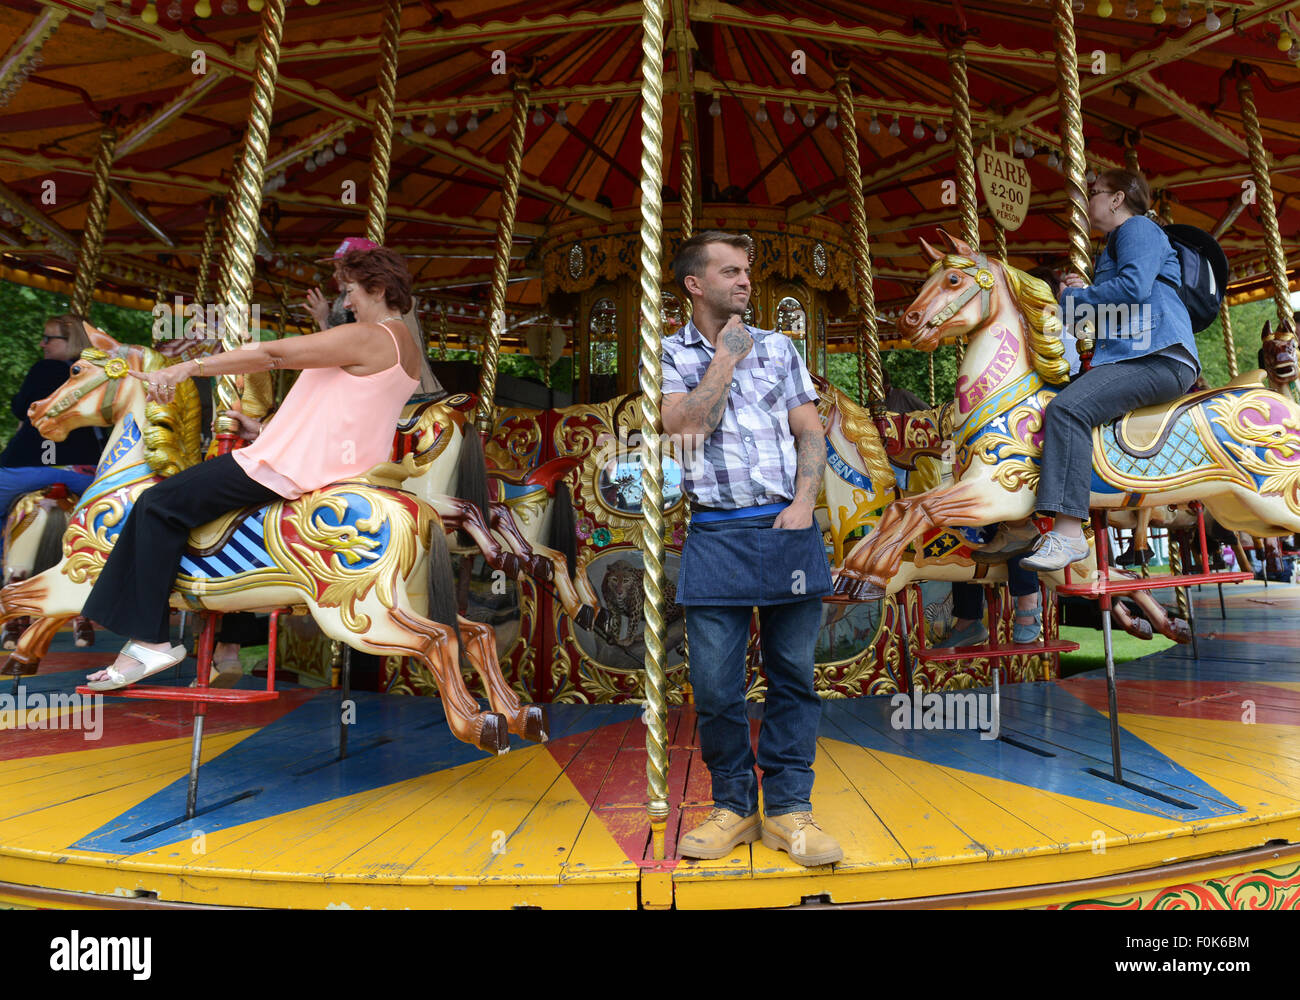 Traditional British merry go round fairground carousel ride Stock Photo